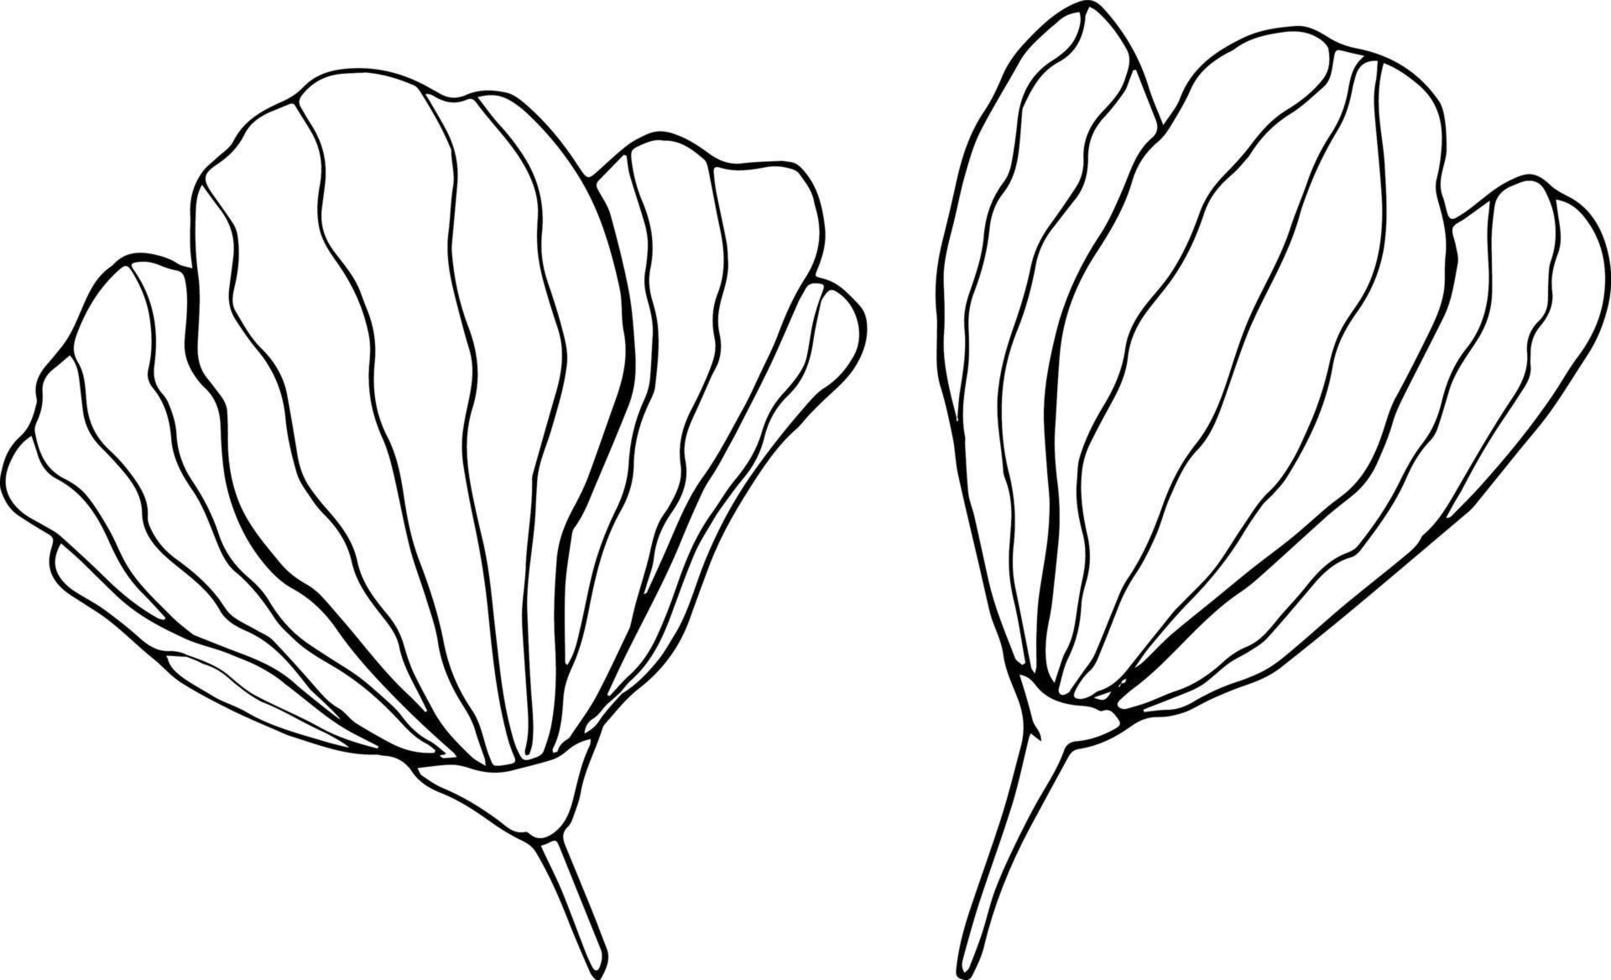 två hand dragen blommor på vit bakgrund. ett linje kontur blommig teckning. vektor illustration